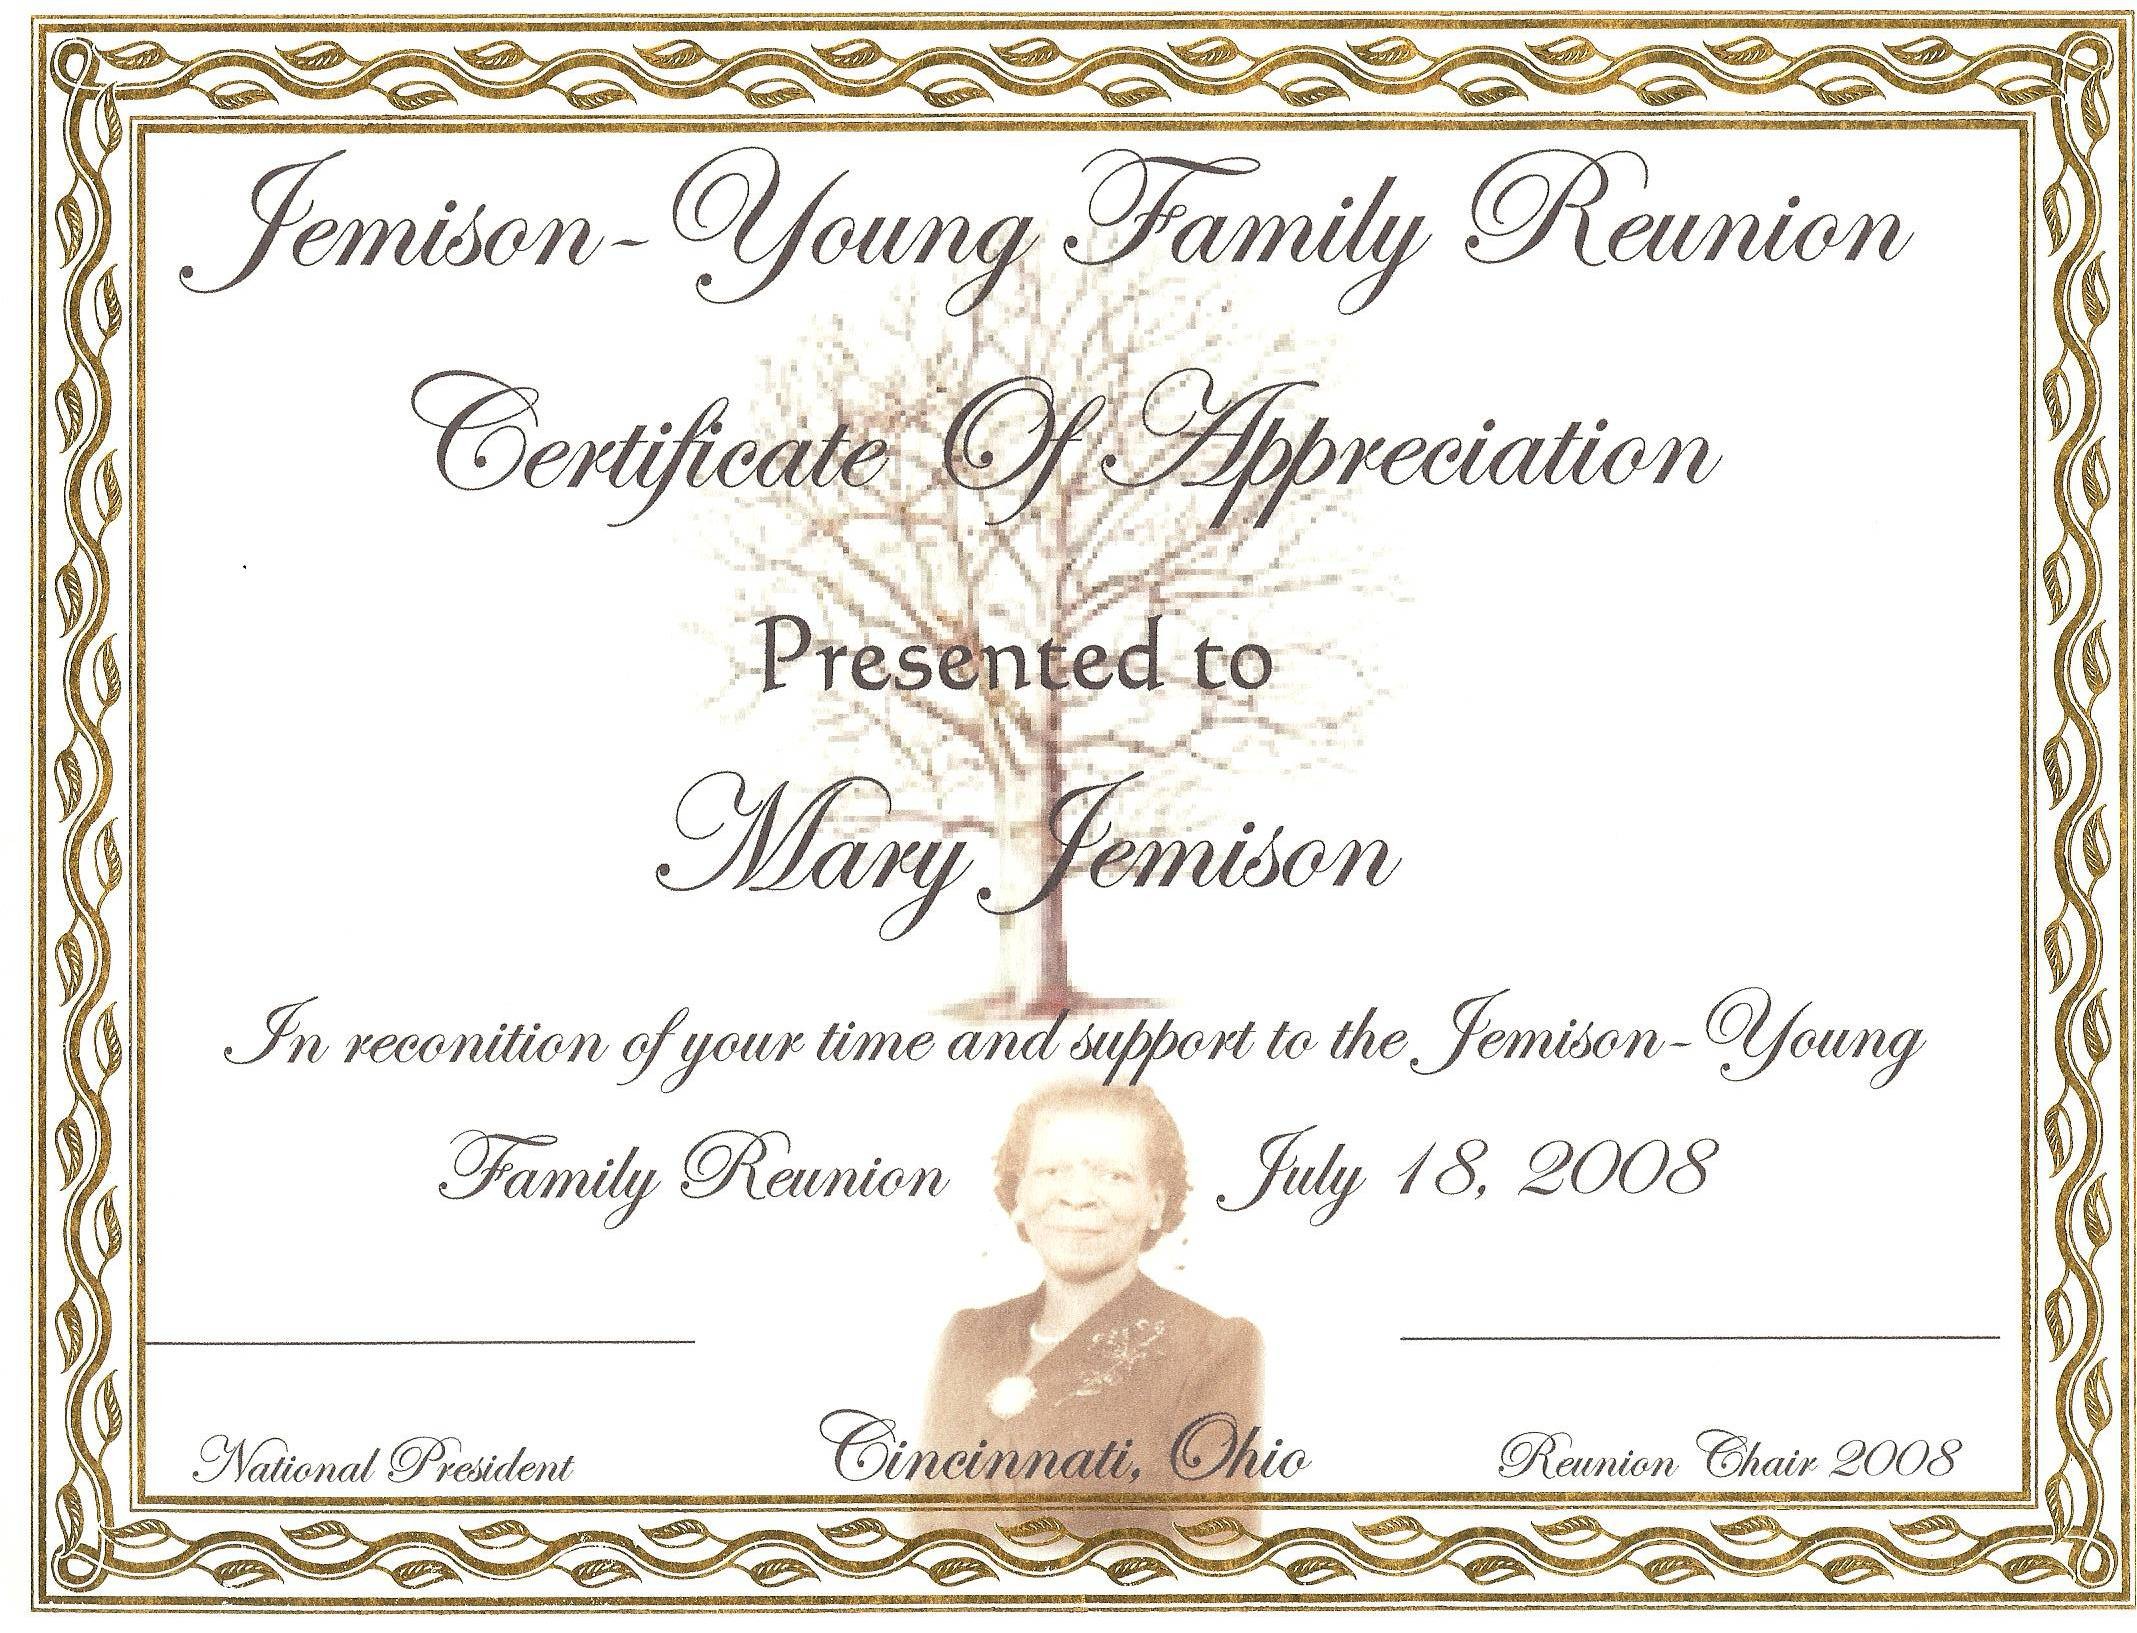 25 Images Of Reunion Certificates Template Geldfritz Net Family Award